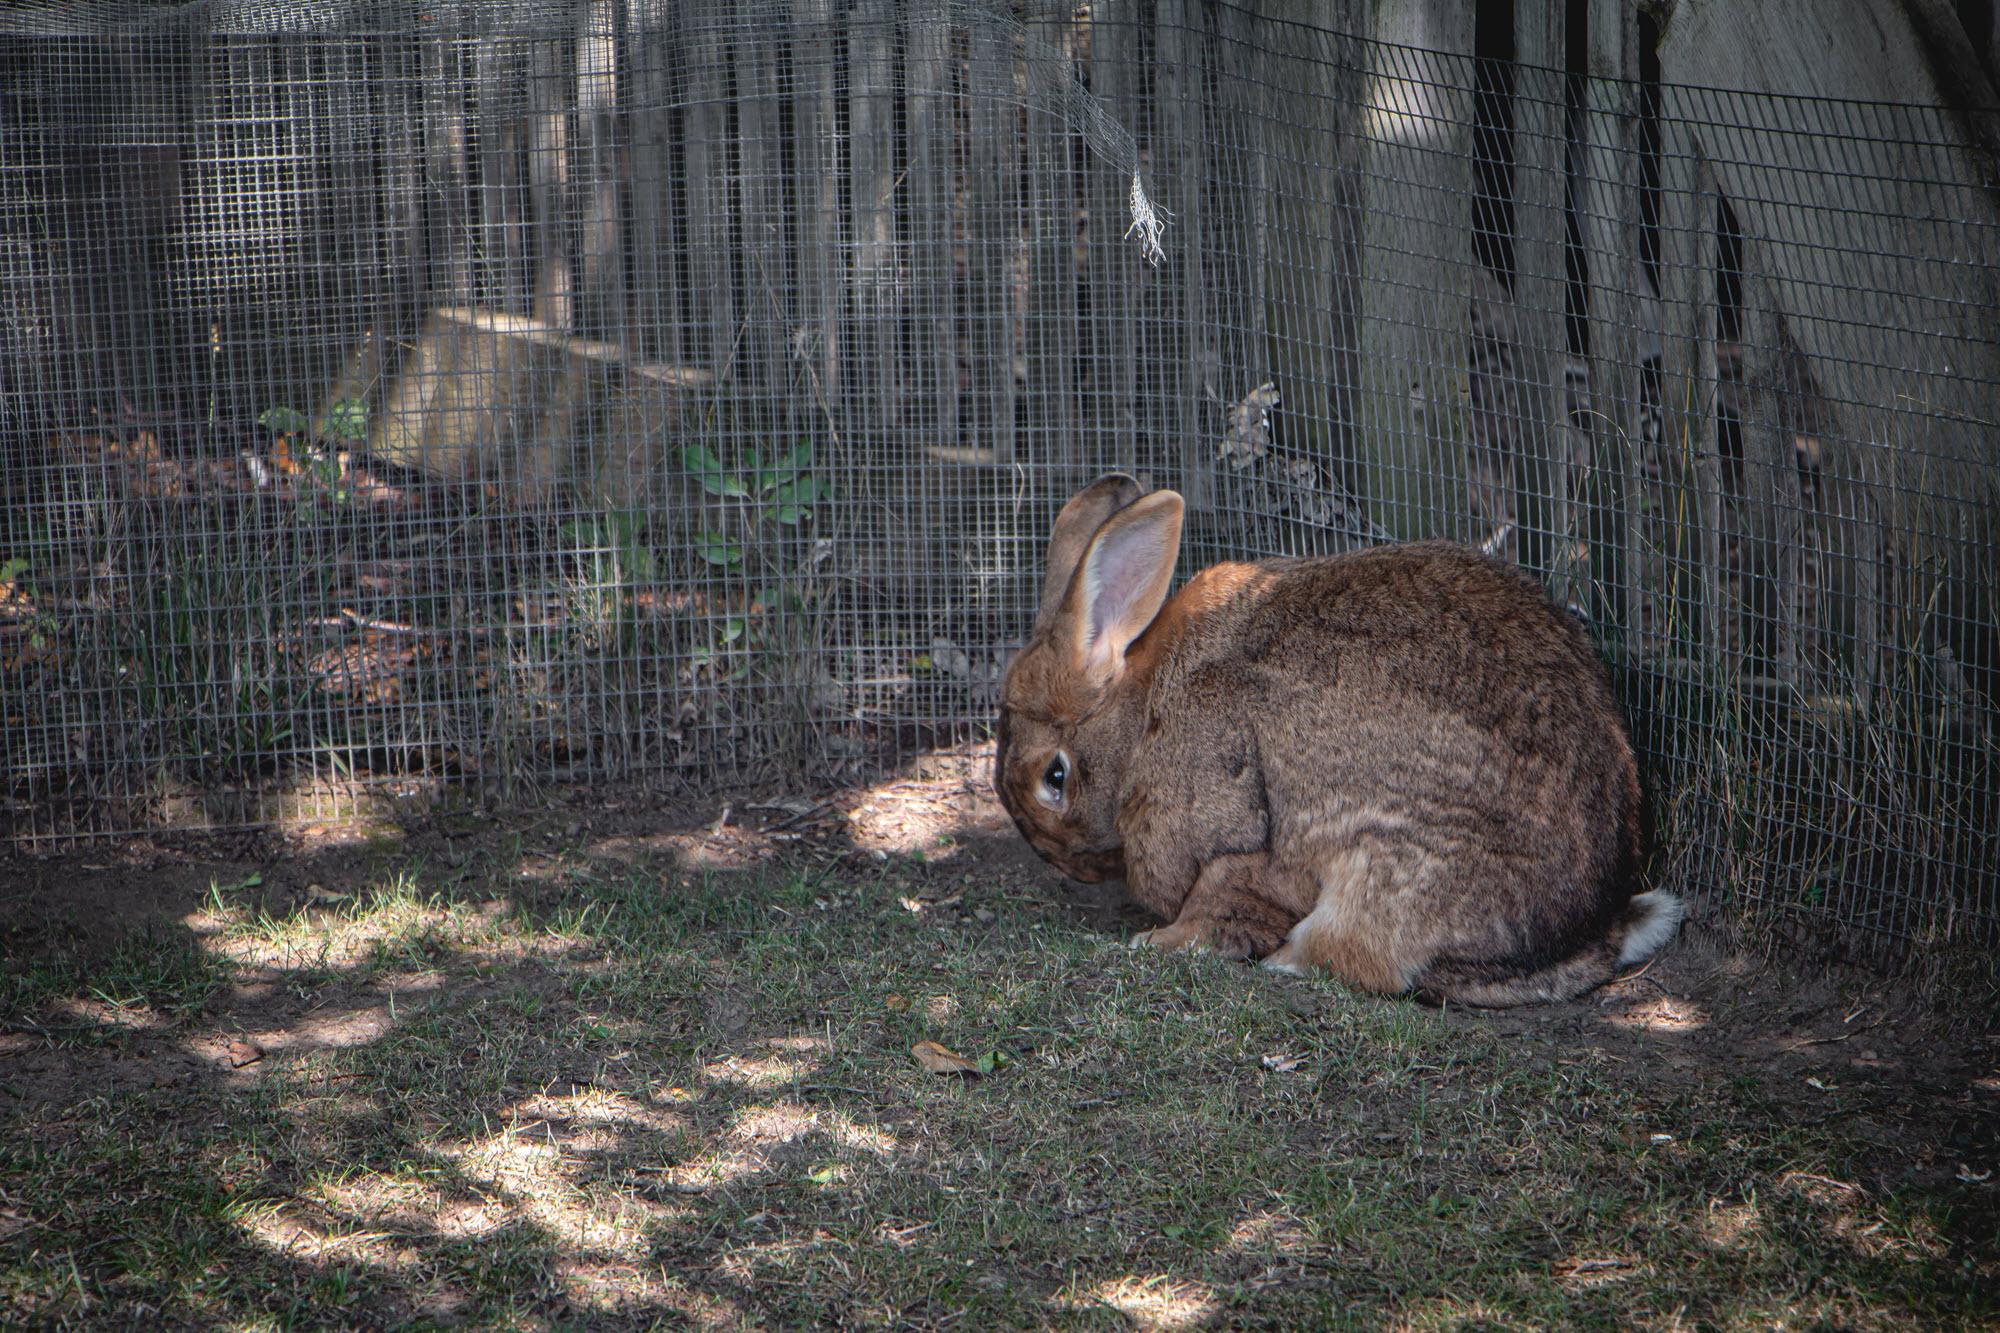 Image shows rabbit in enclosure at African Lion Safari.